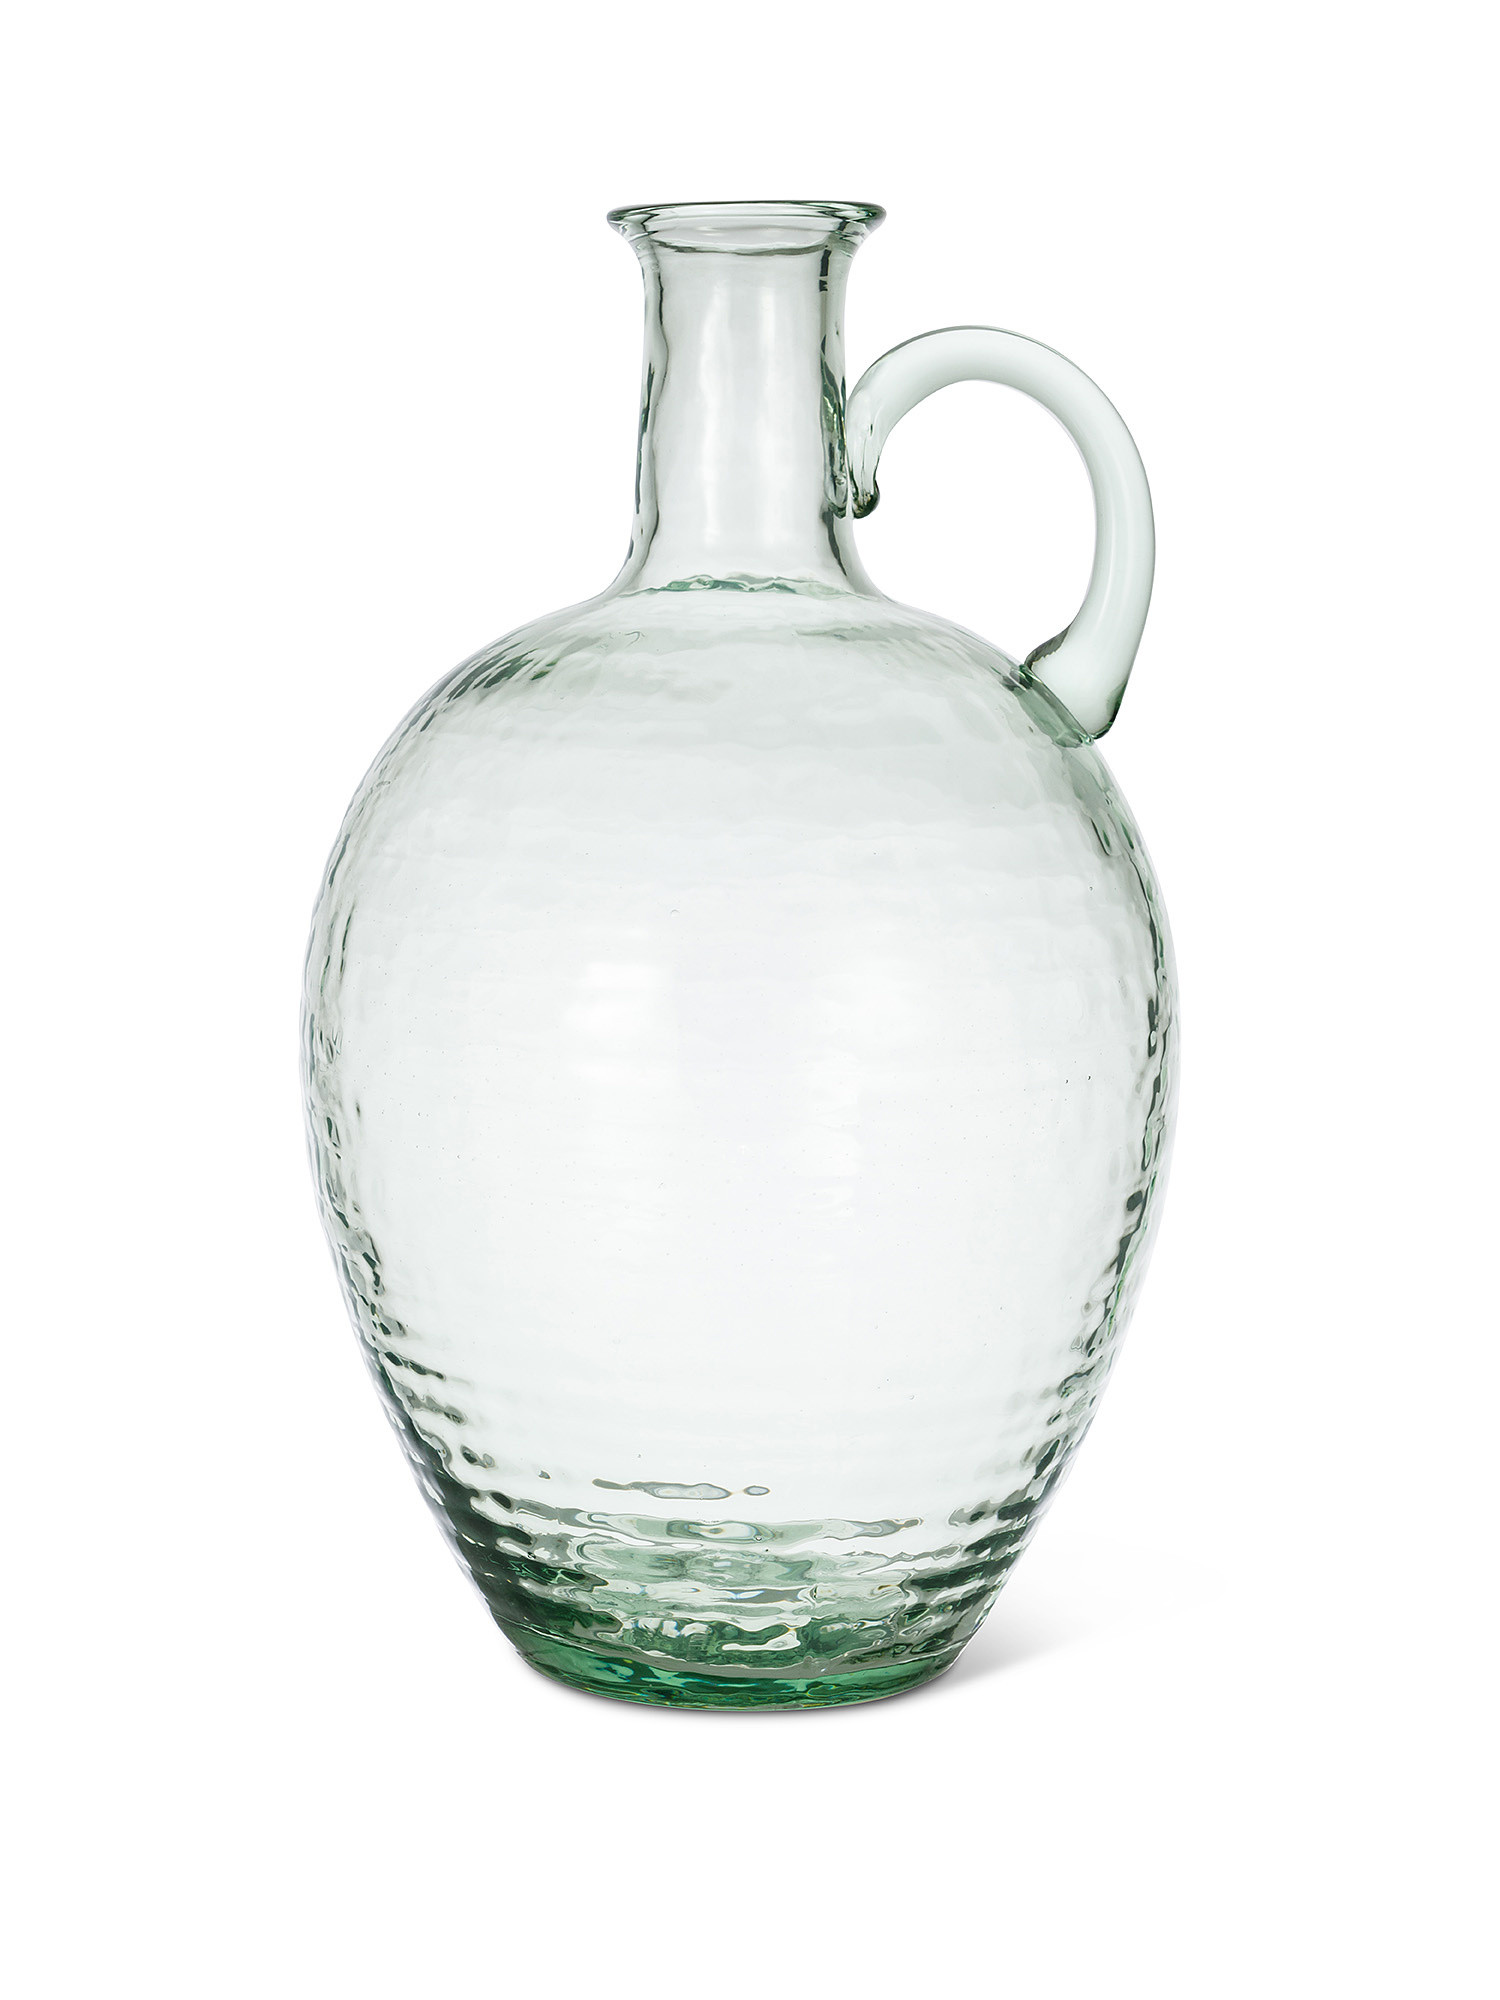 Colored glass paste decorative pitcher, Transparent, large image number 0